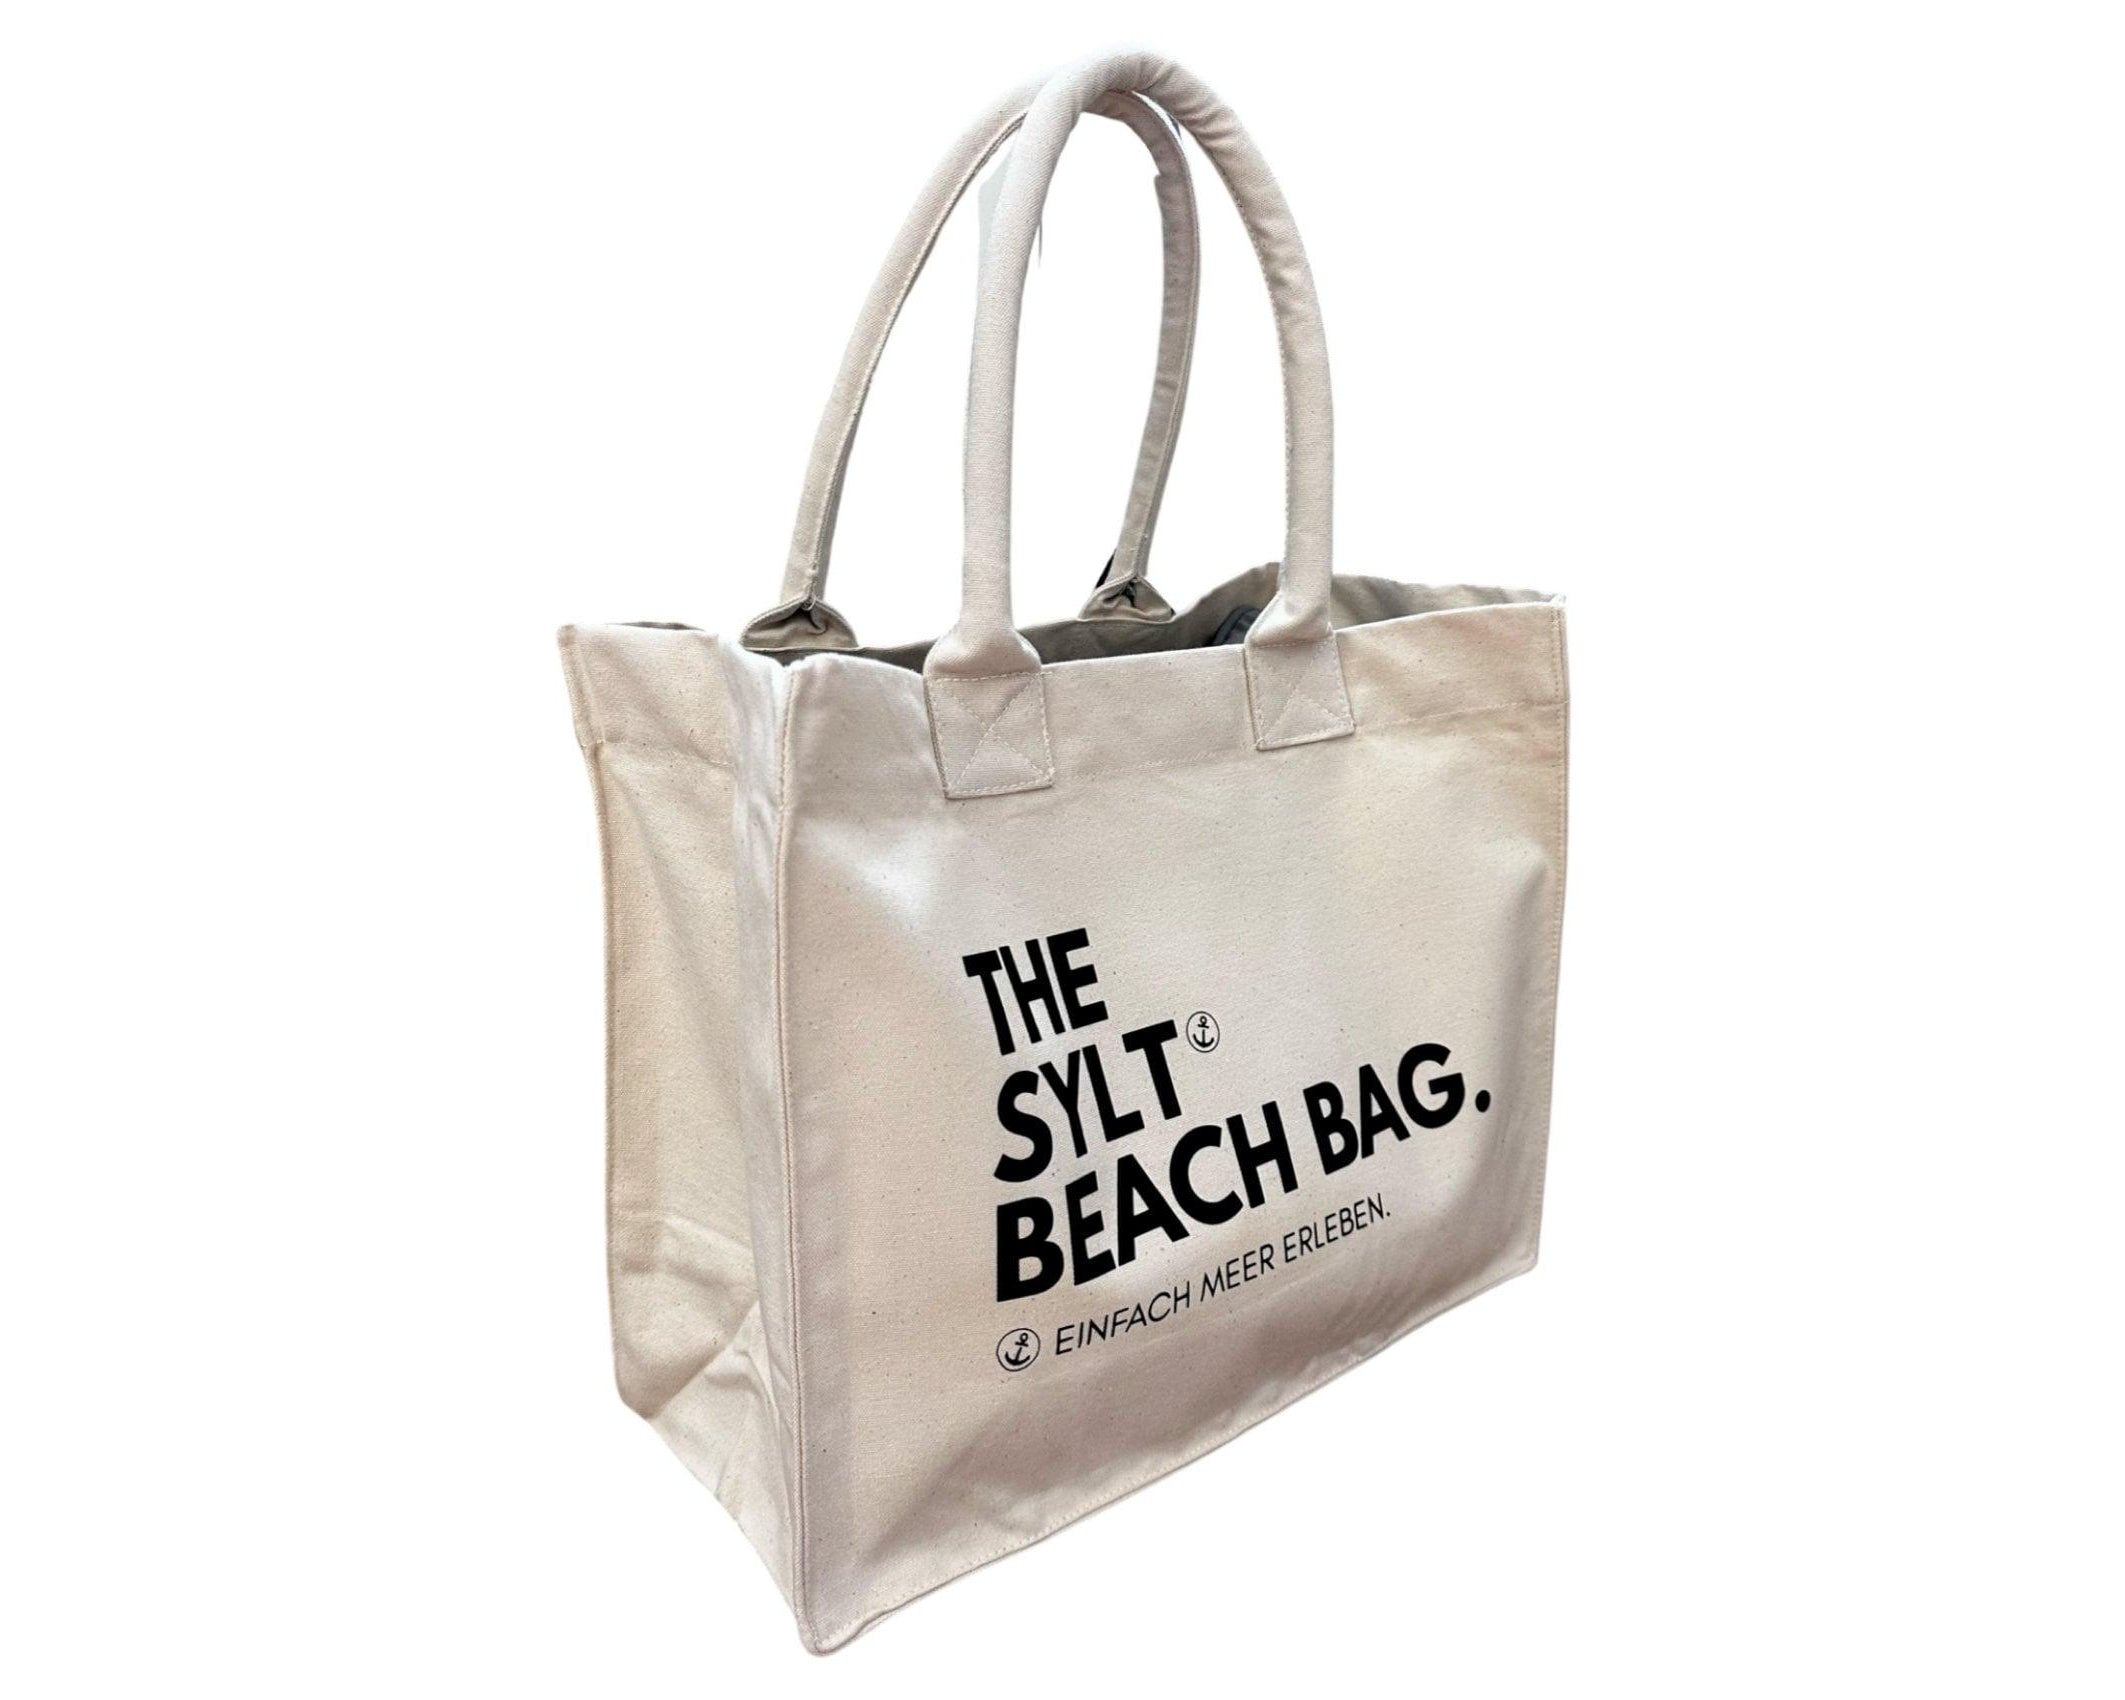 Tasche | SYLT Beach Bag | beiger Canvas - Roo's Gift Shop